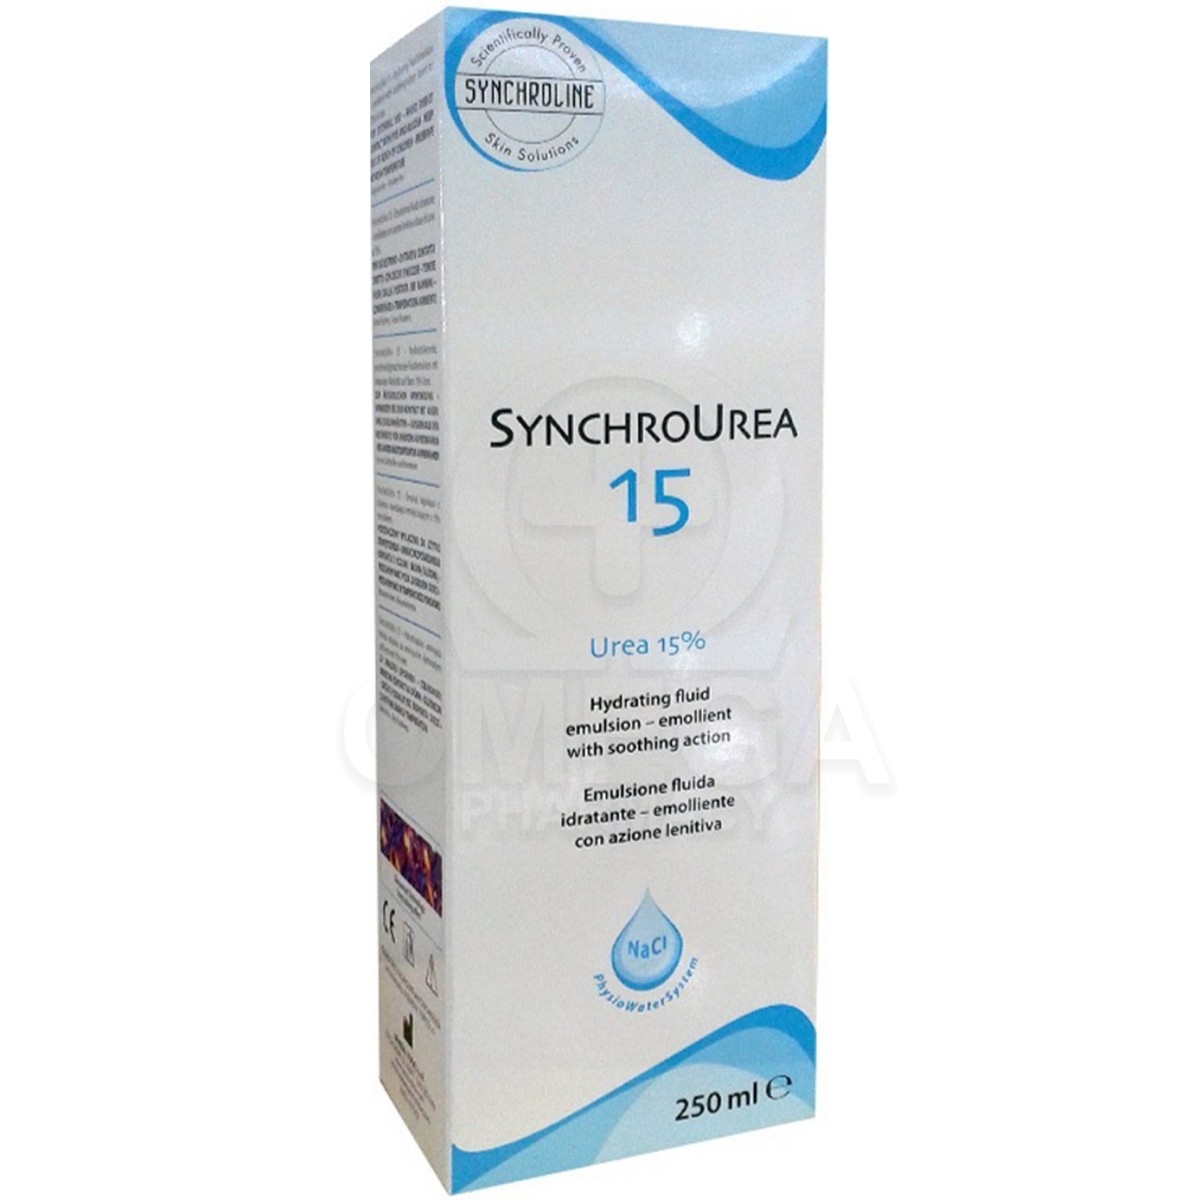 SYNCHROLINE Synchrourea 15 Hydrating Fluid Emulsion, με 15% Urea, 250ml